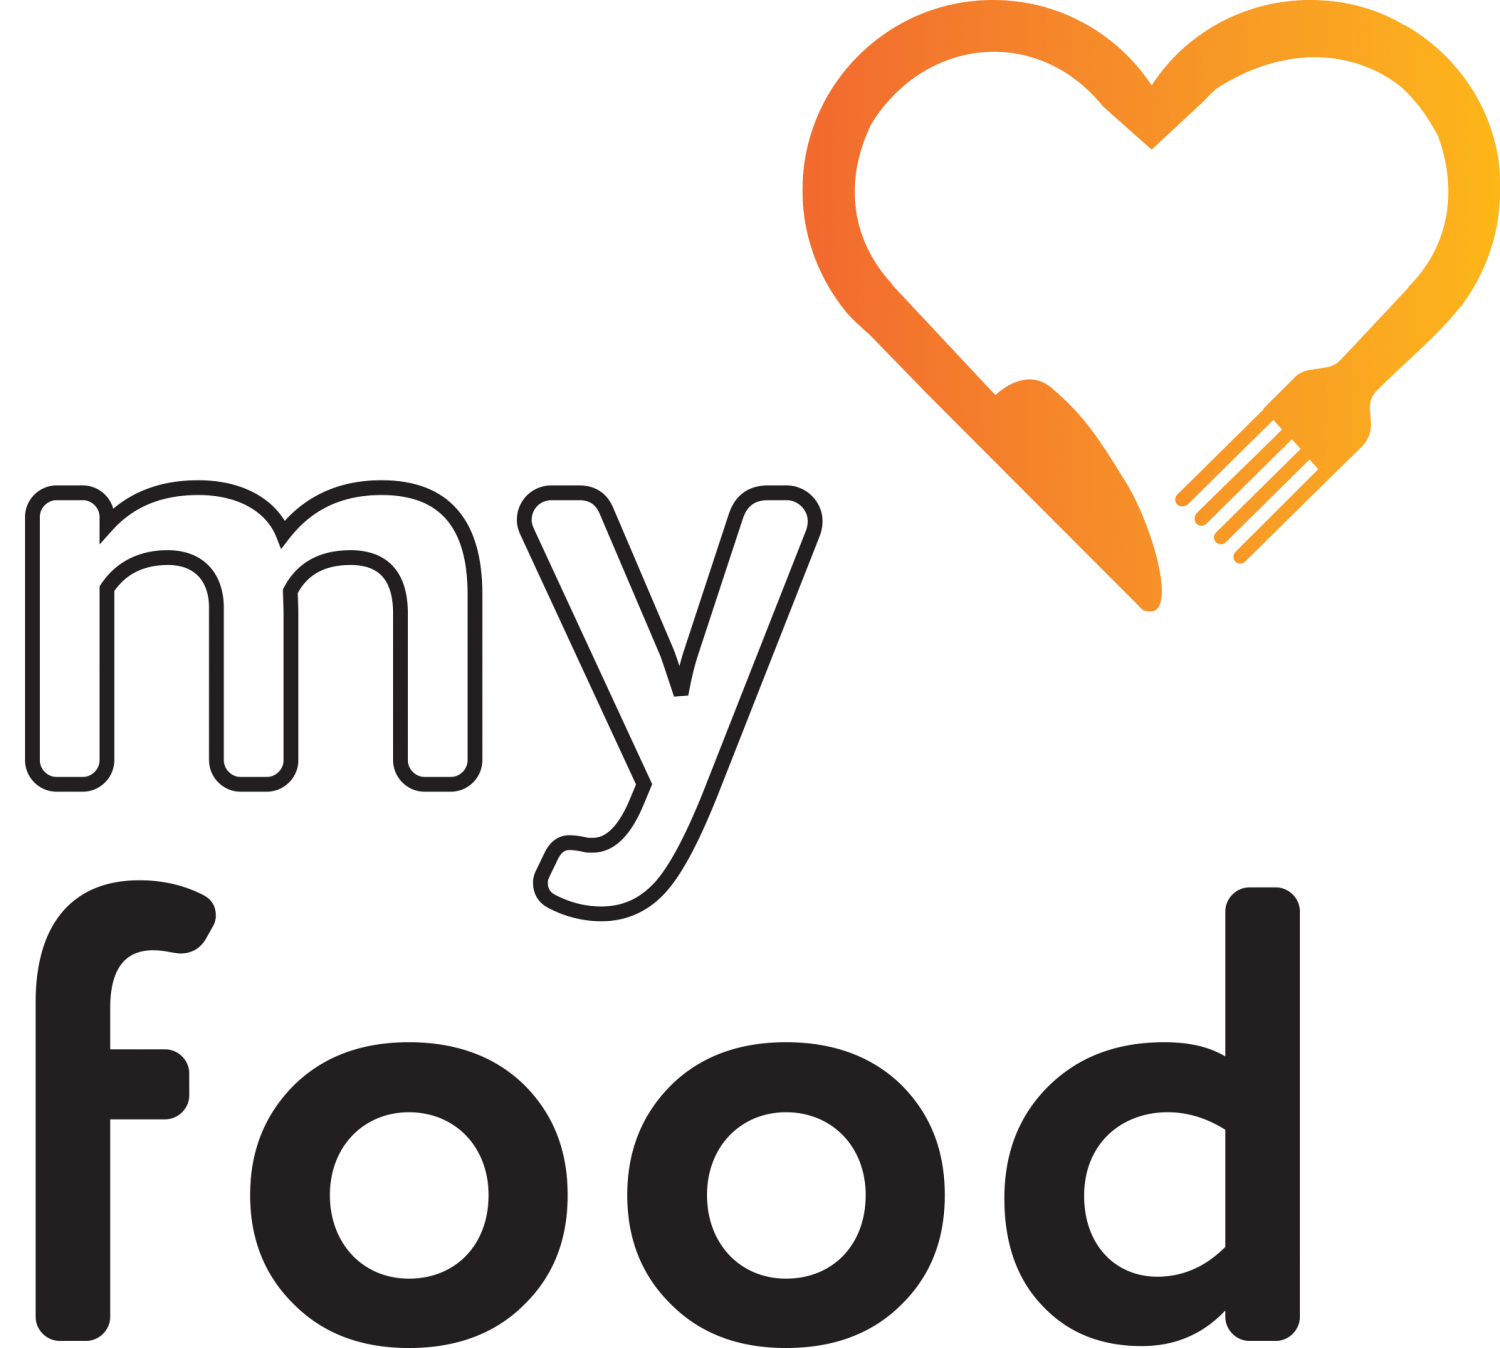 My friend food. My food. My food лого. My food доставка еды. Логотип фуд ру.